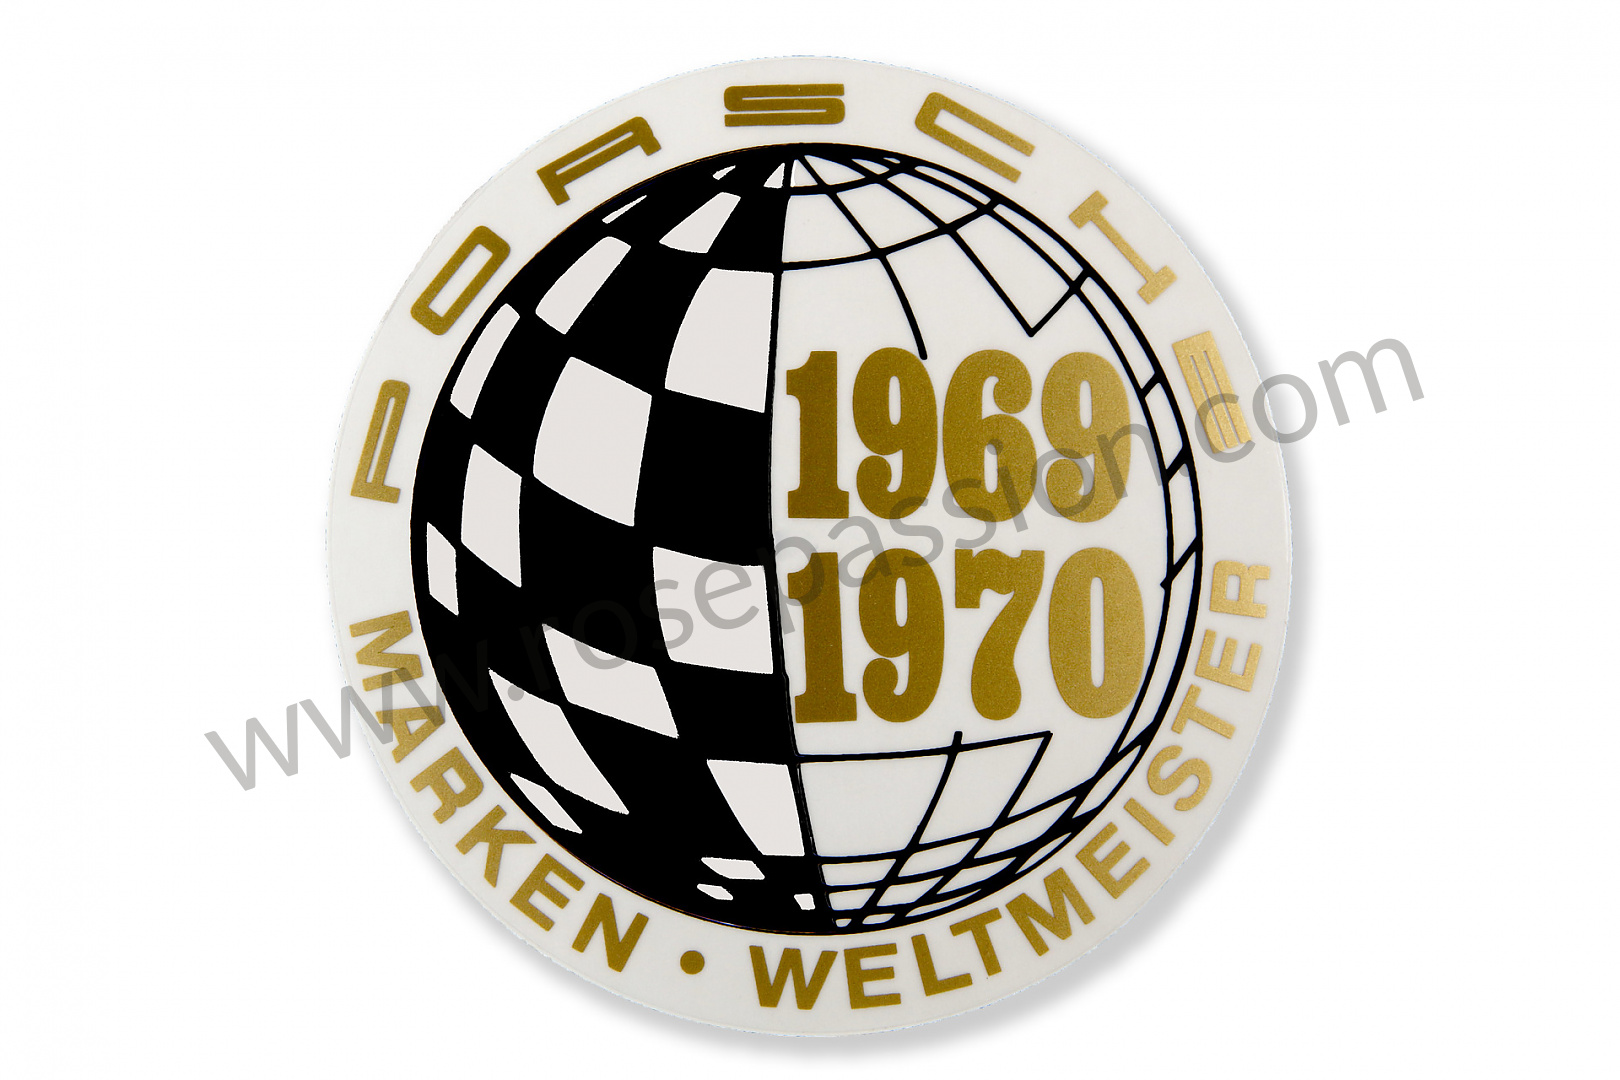 P233244 - 91170110301 - Sticker, marken weltmeister 69-70 for Porsche 906  CARRERA 6 / 1966